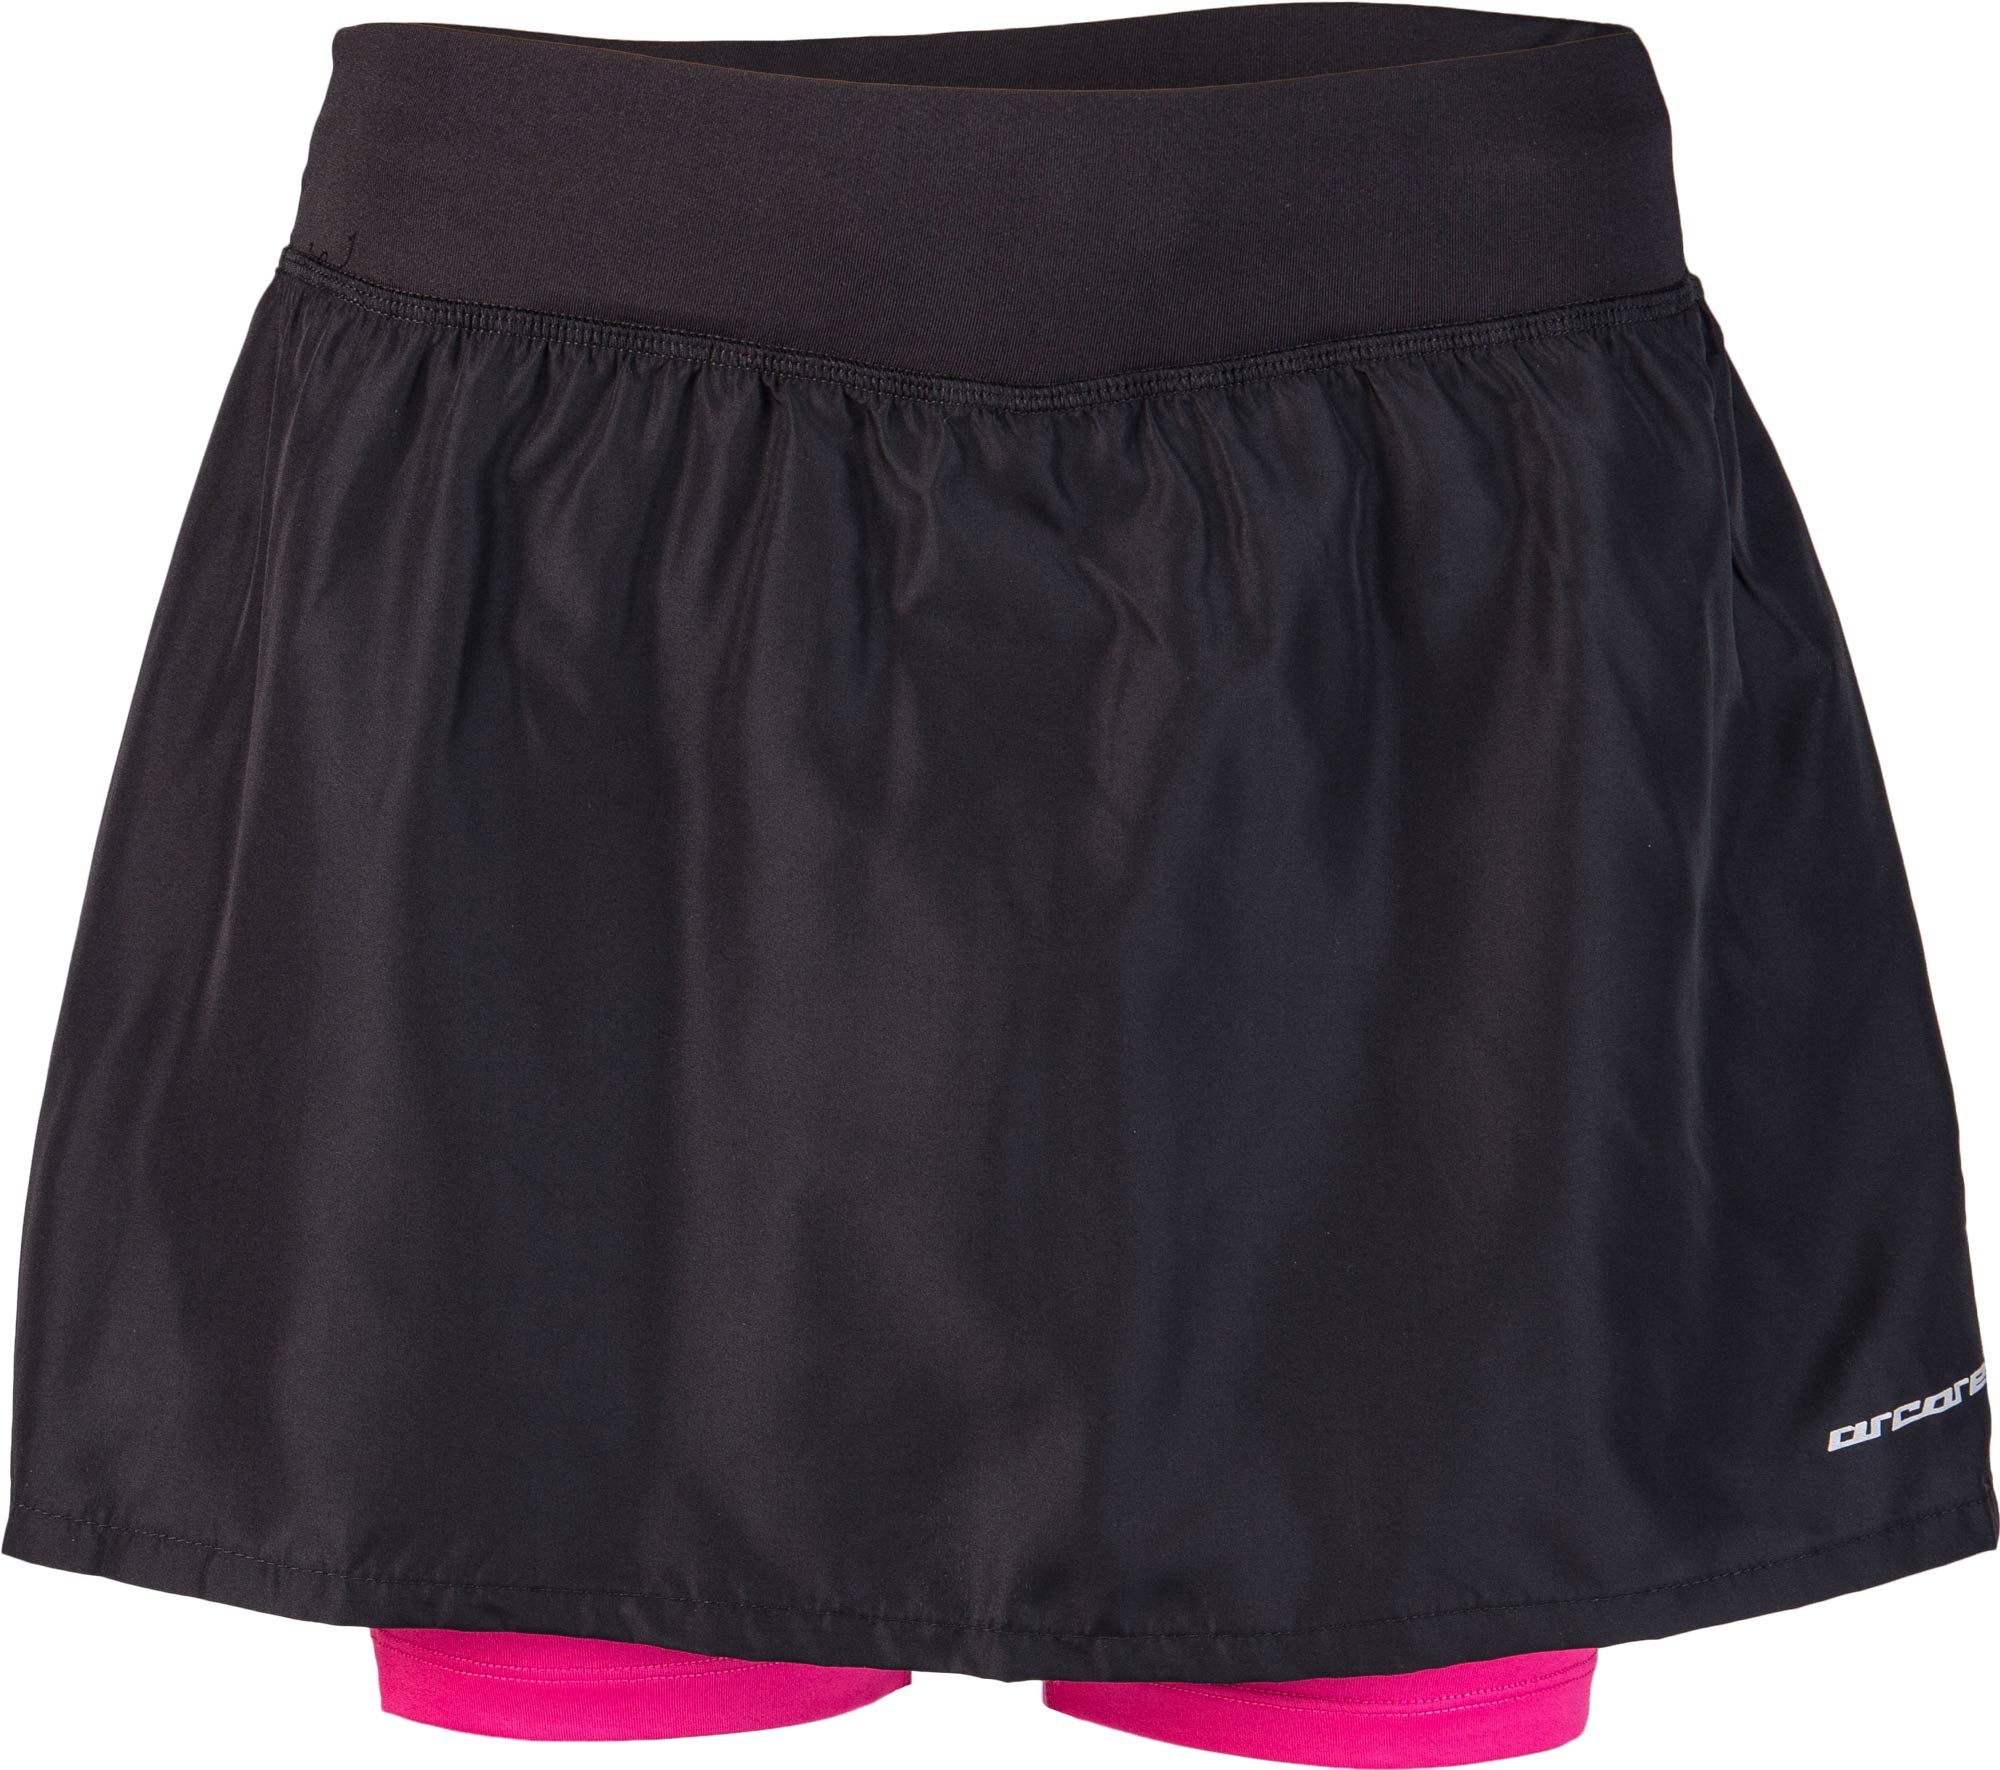 Women’s running shorts with a skirt